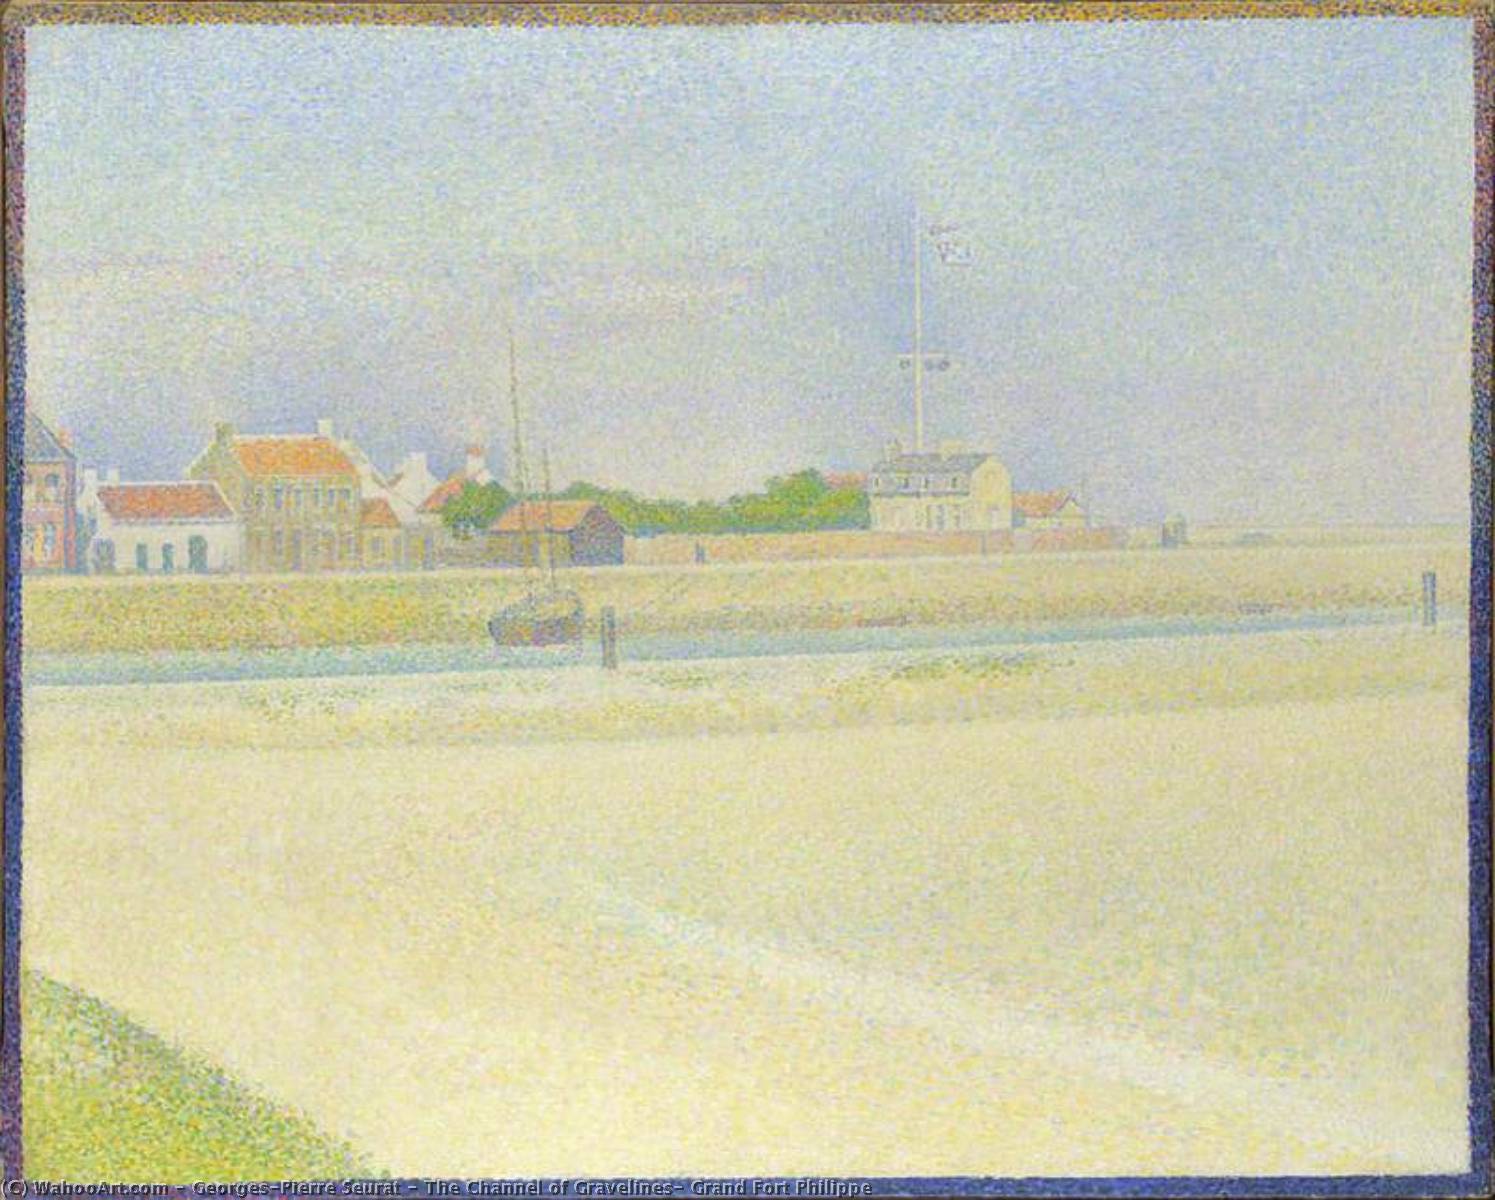 WikiOO.org - Enciclopedia of Fine Arts - Pictura, lucrări de artă Georges Pierre Seurat - The Channel of Gravelines, Grand Fort Philippe